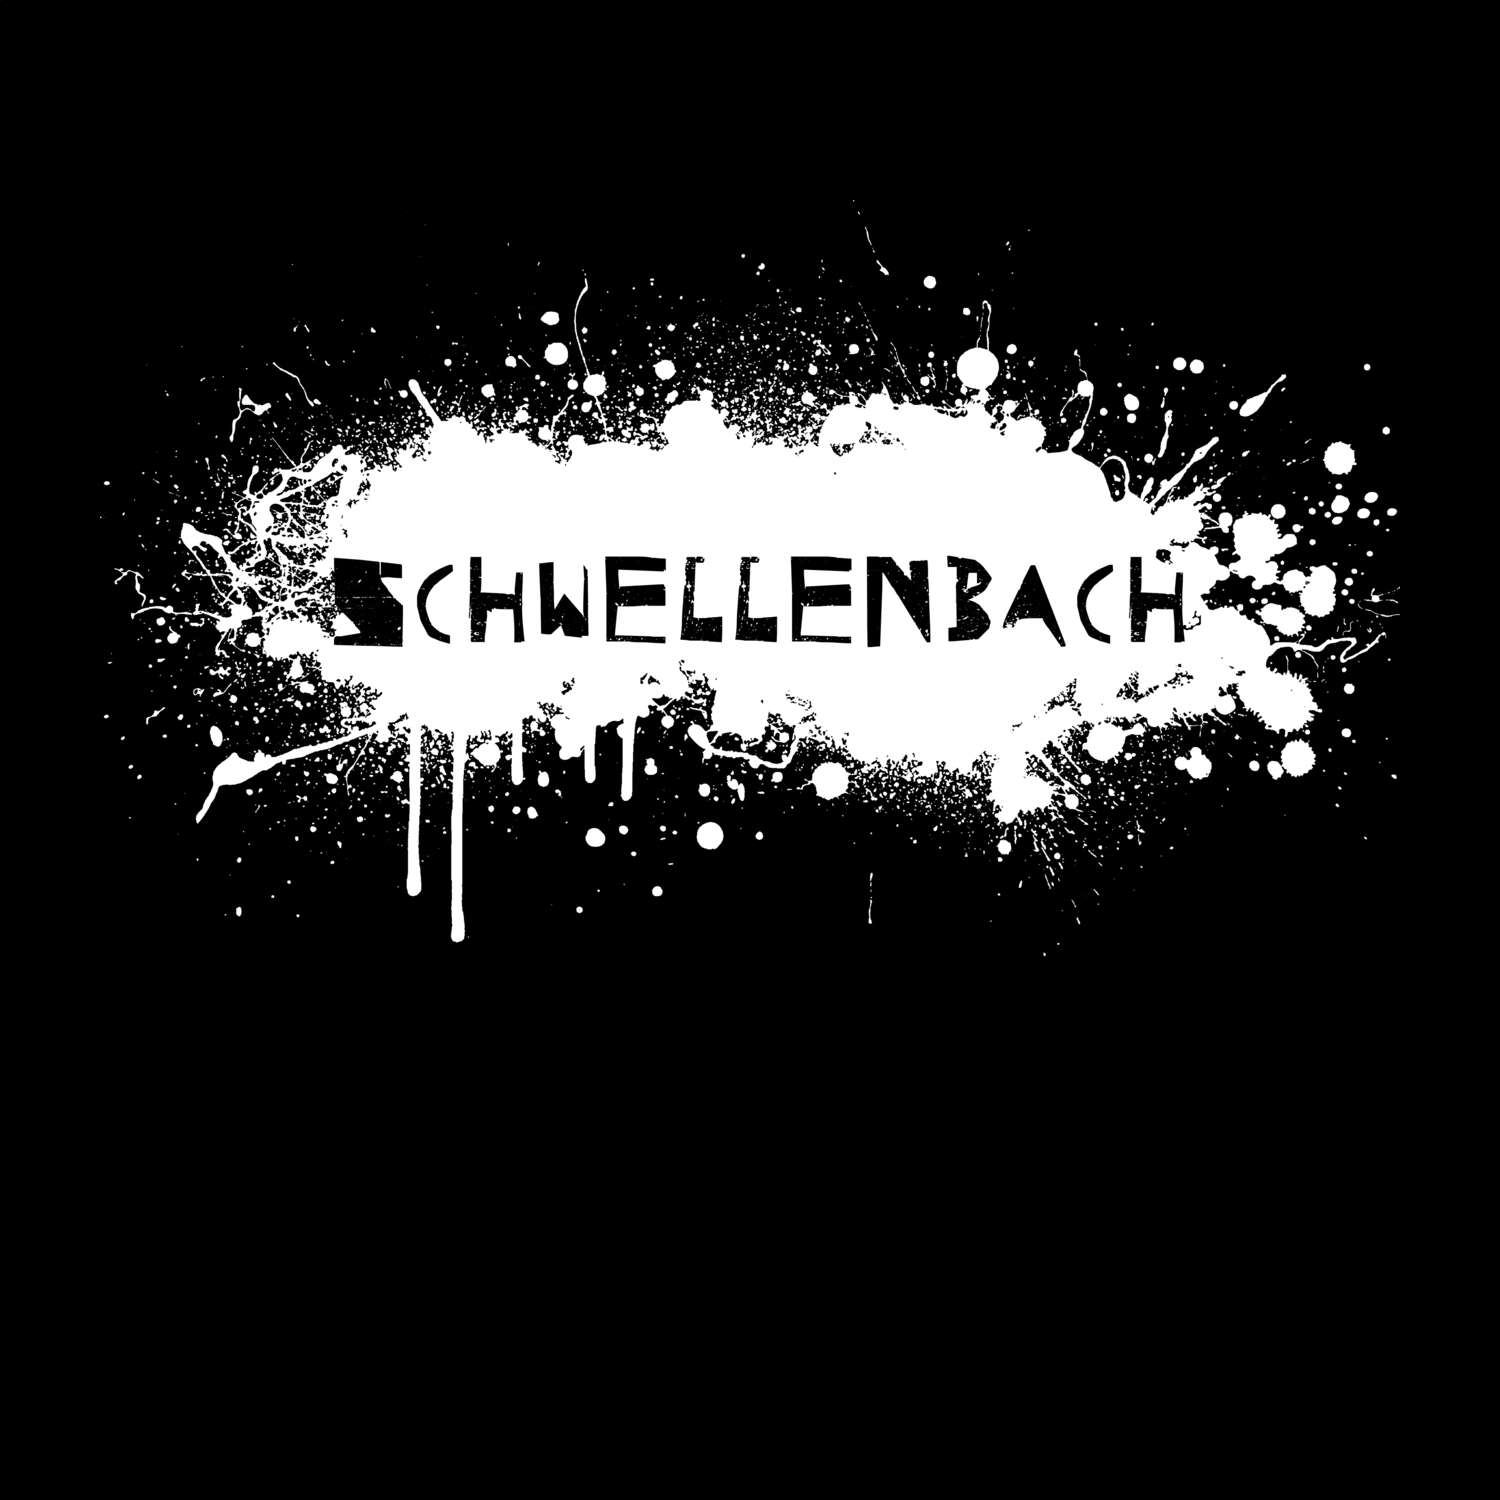 Schwellenbach T-Shirt »Paint Splash Punk«